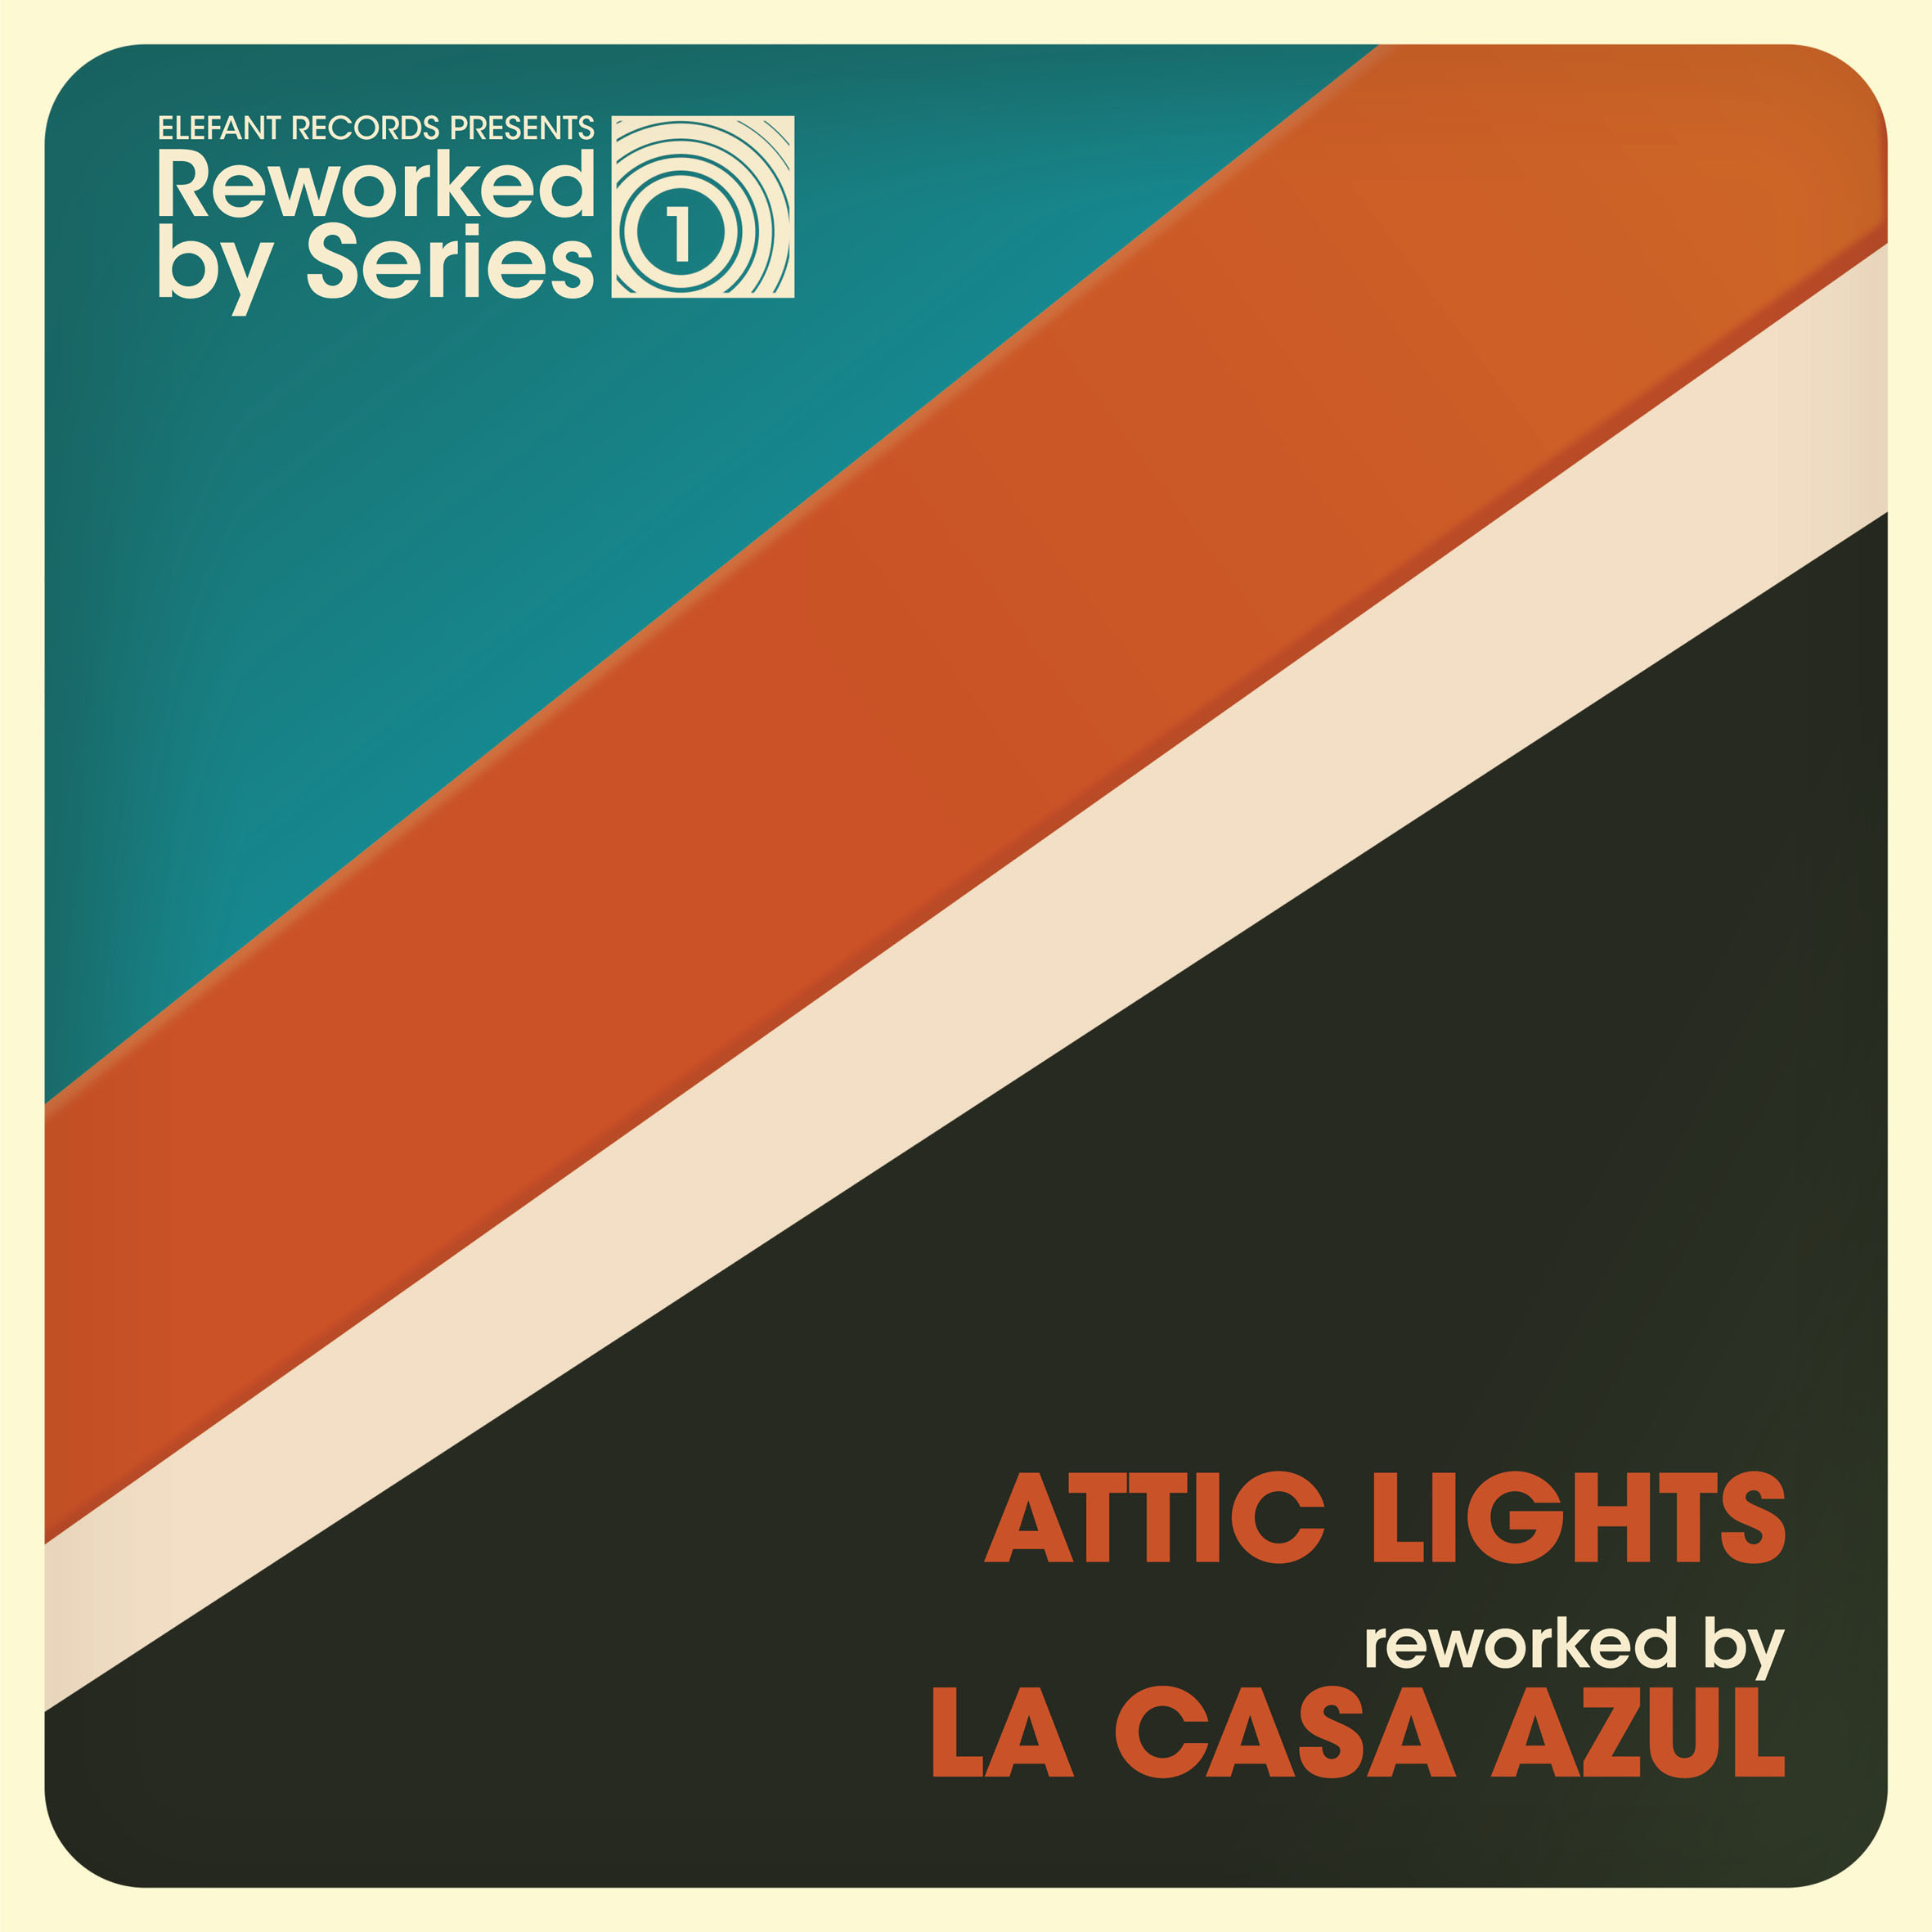 Attic Lights "Reworked By La Casa Azul" Single 7" 